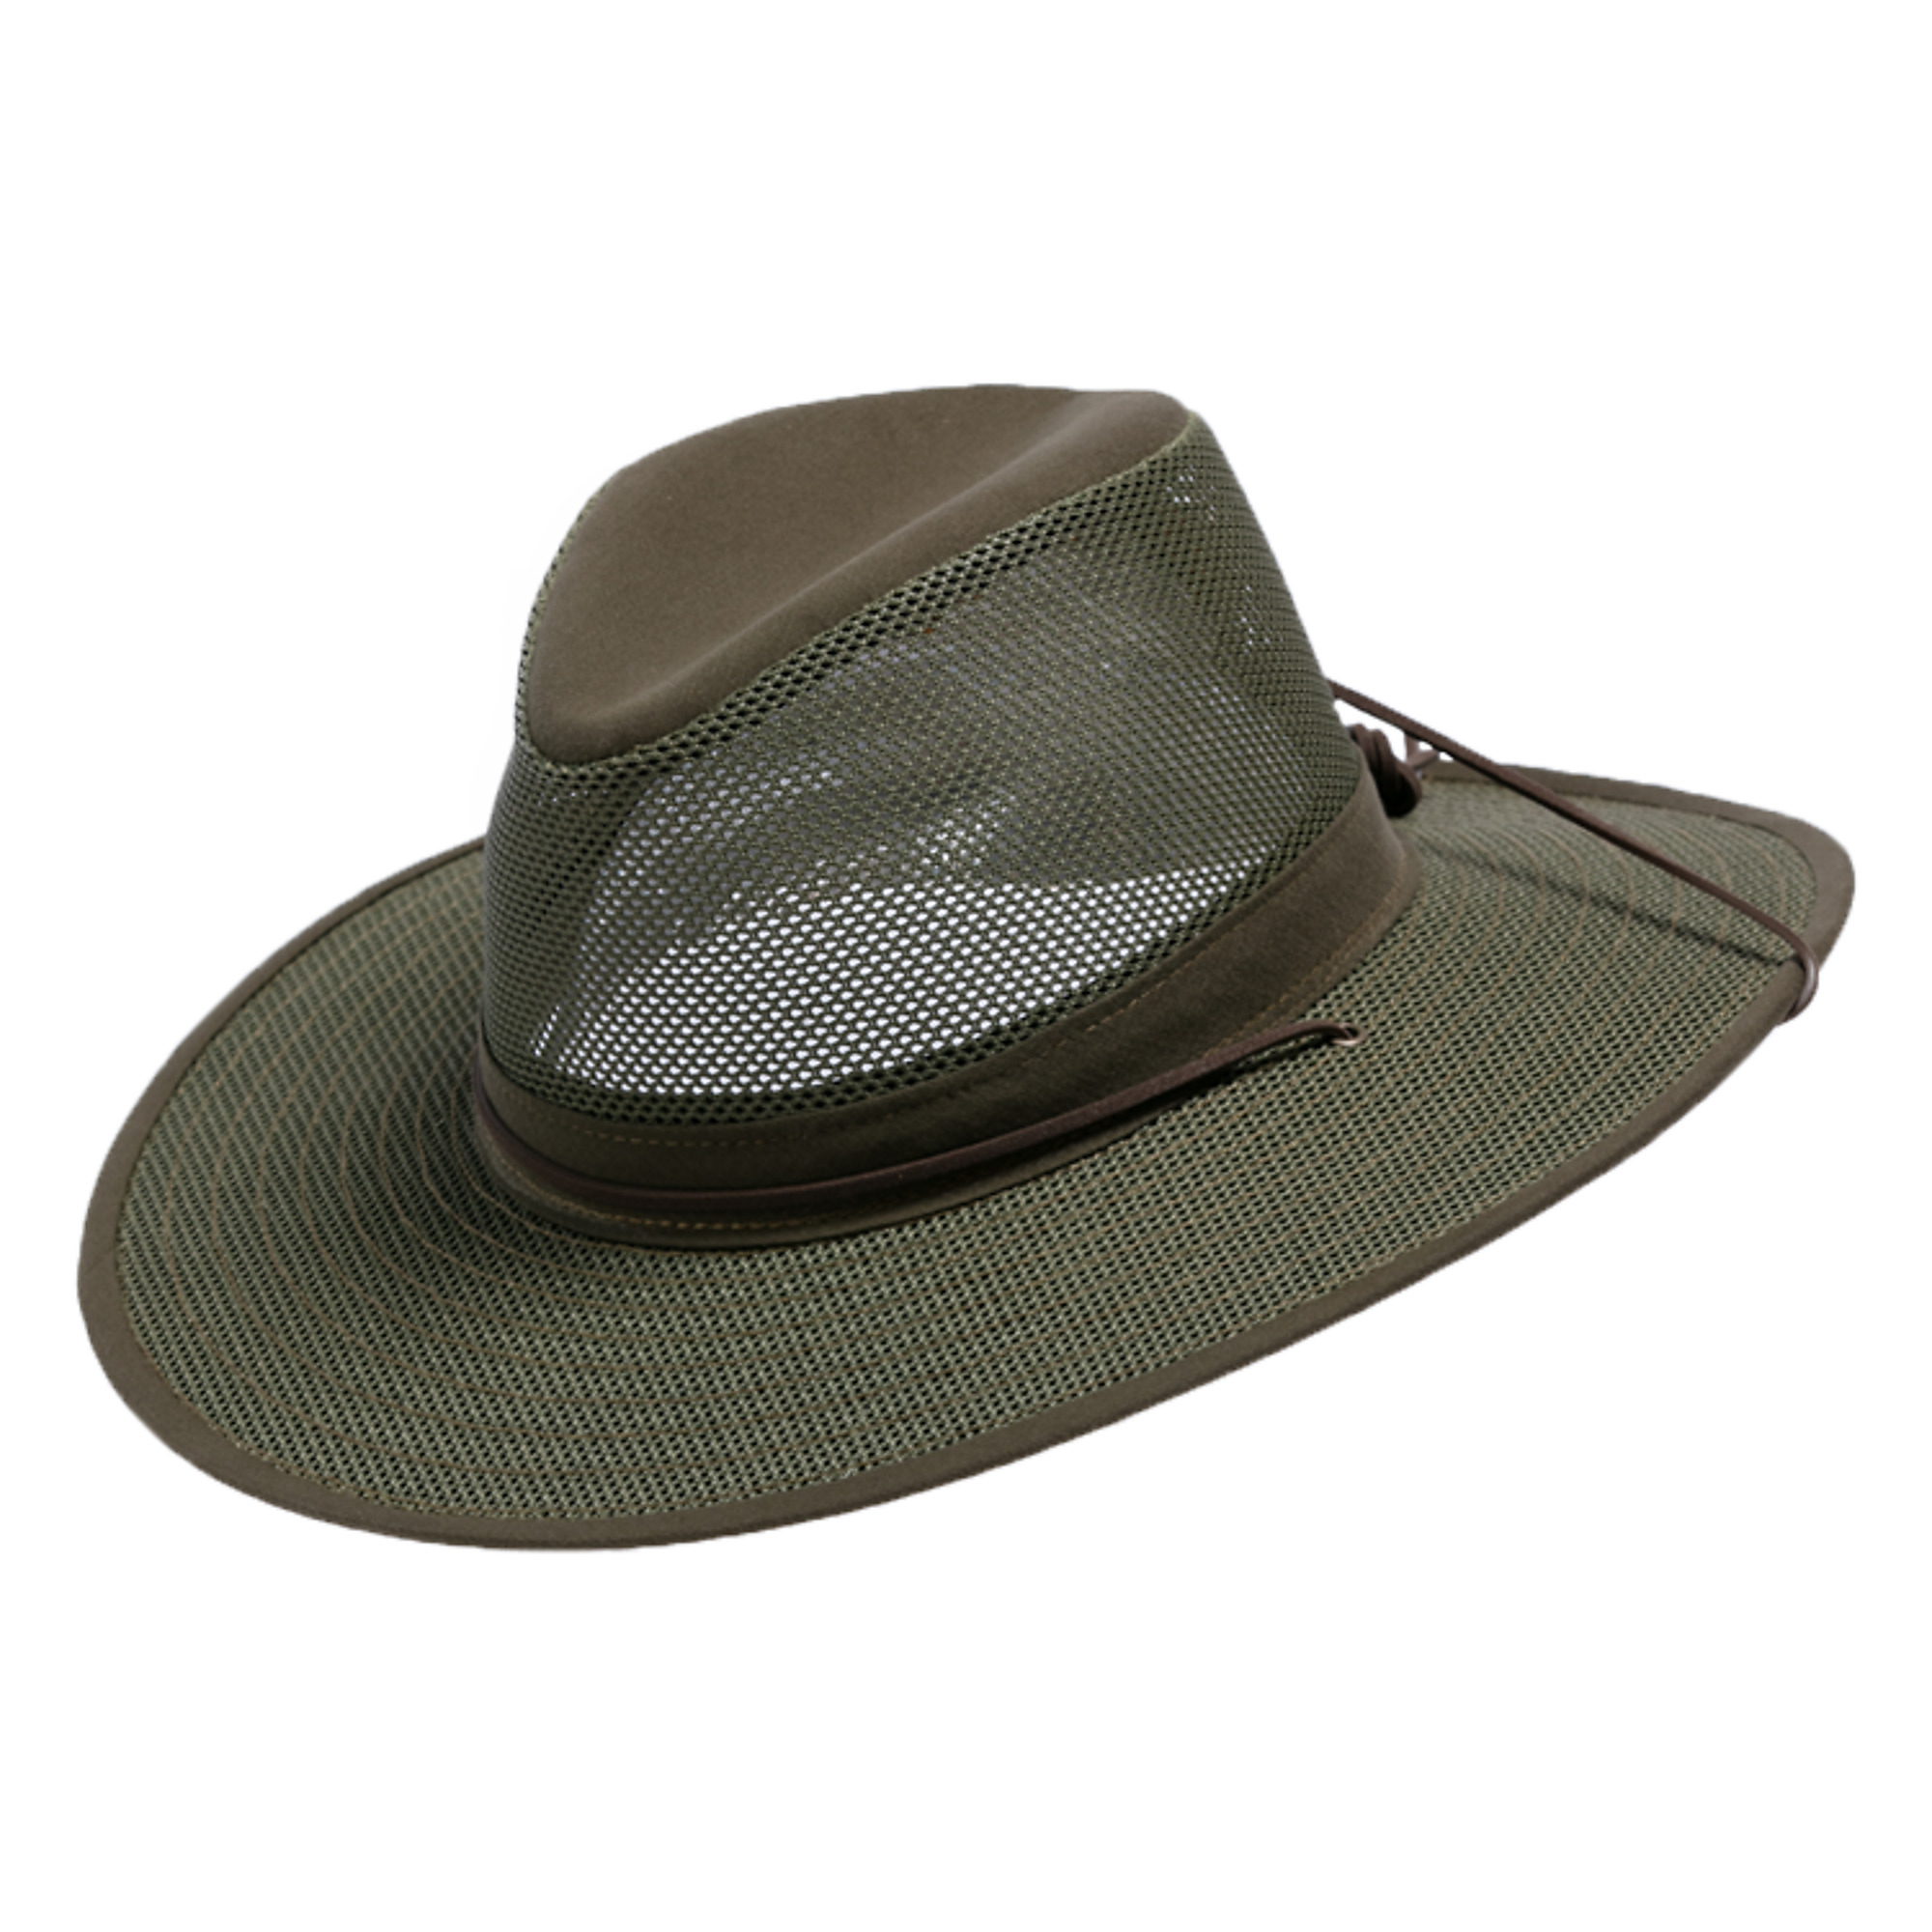 Henschel Hat Company, Orignal Aussie Breezer Hat, UPF 50+